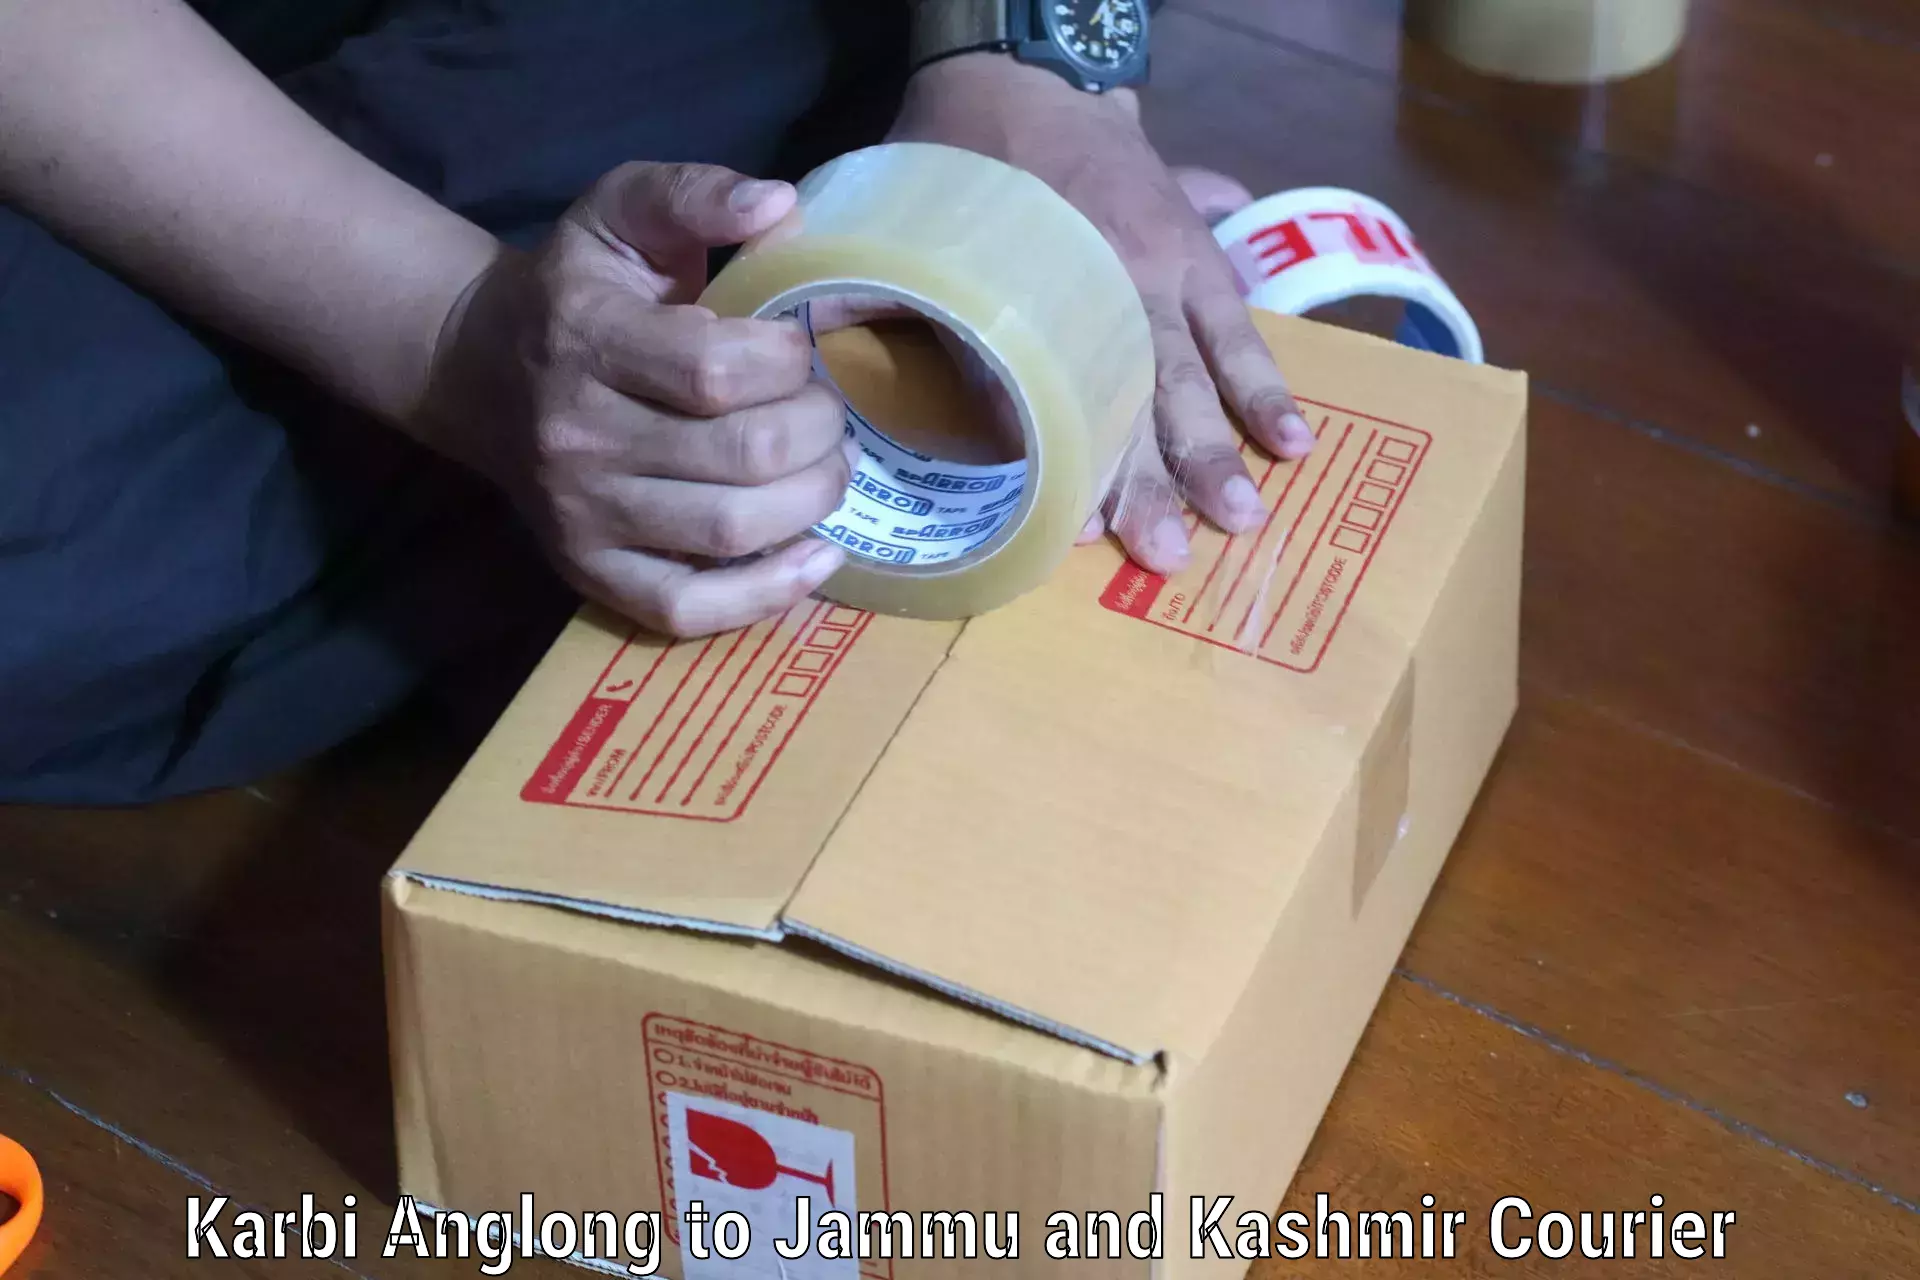 Professional courier handling Karbi Anglong to Bohri